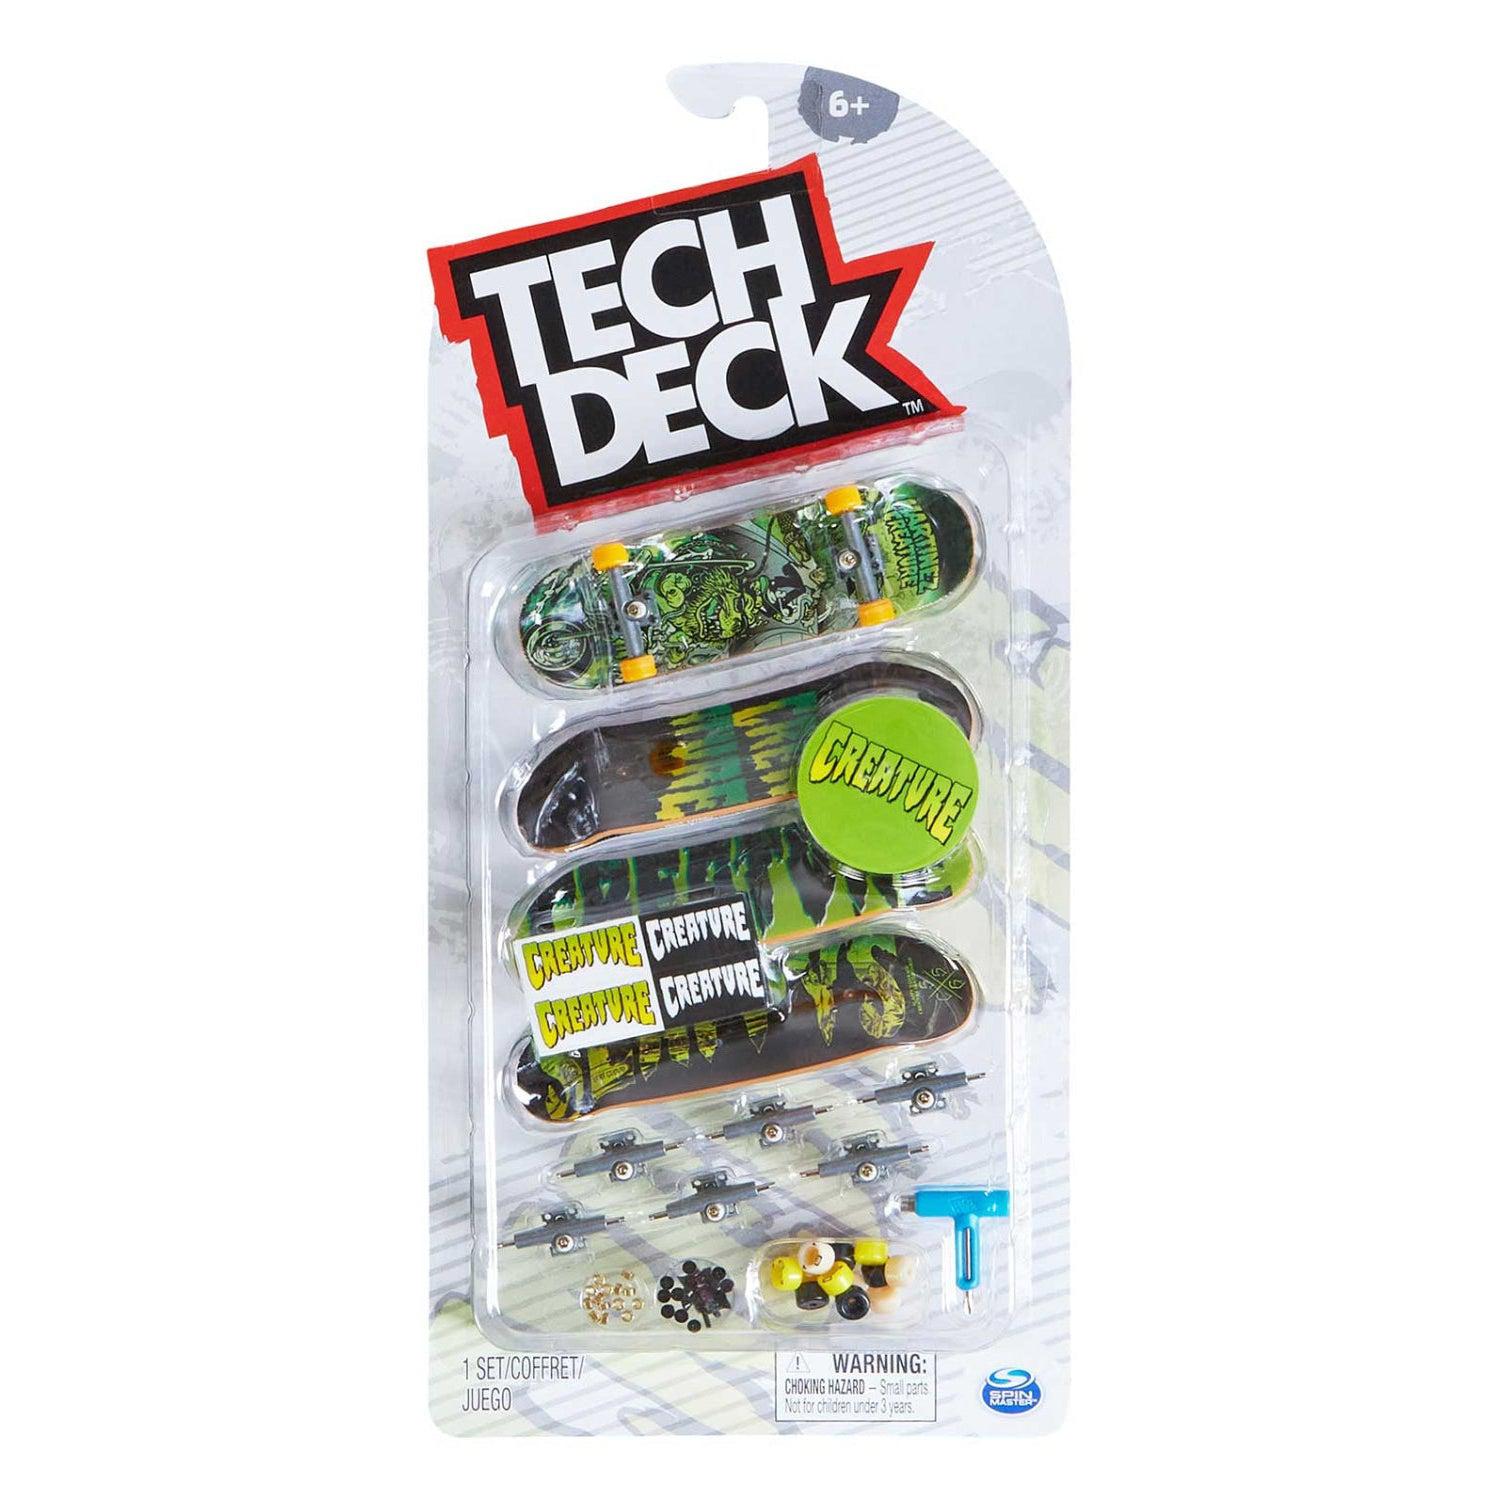 Pack Versus 2 Finger Skate Tech Deck